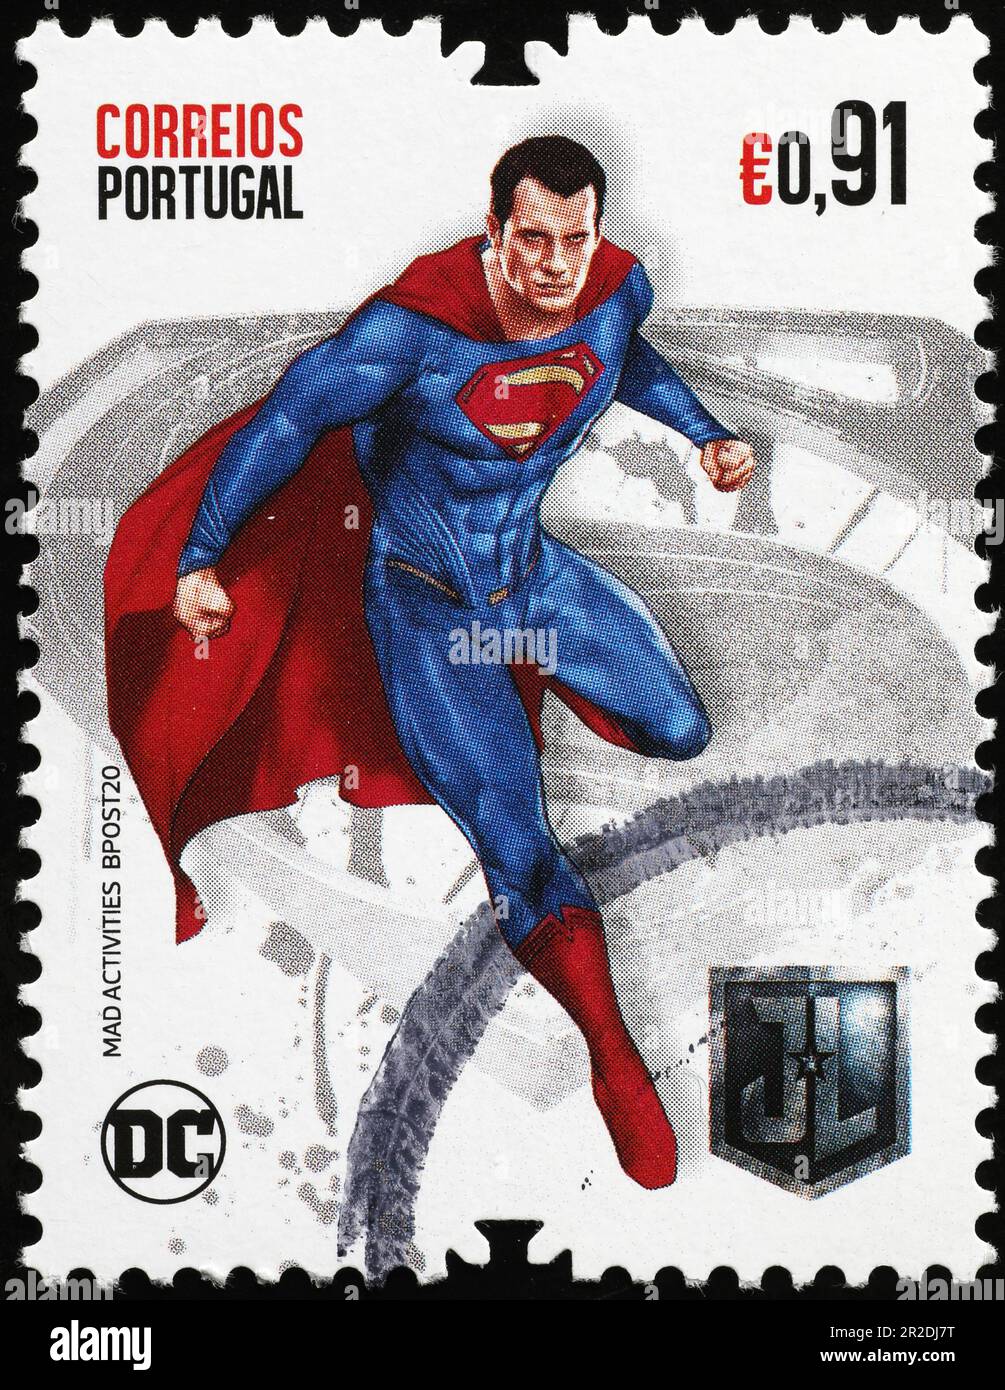 Superman on portuguese postage stamp Stock Photo